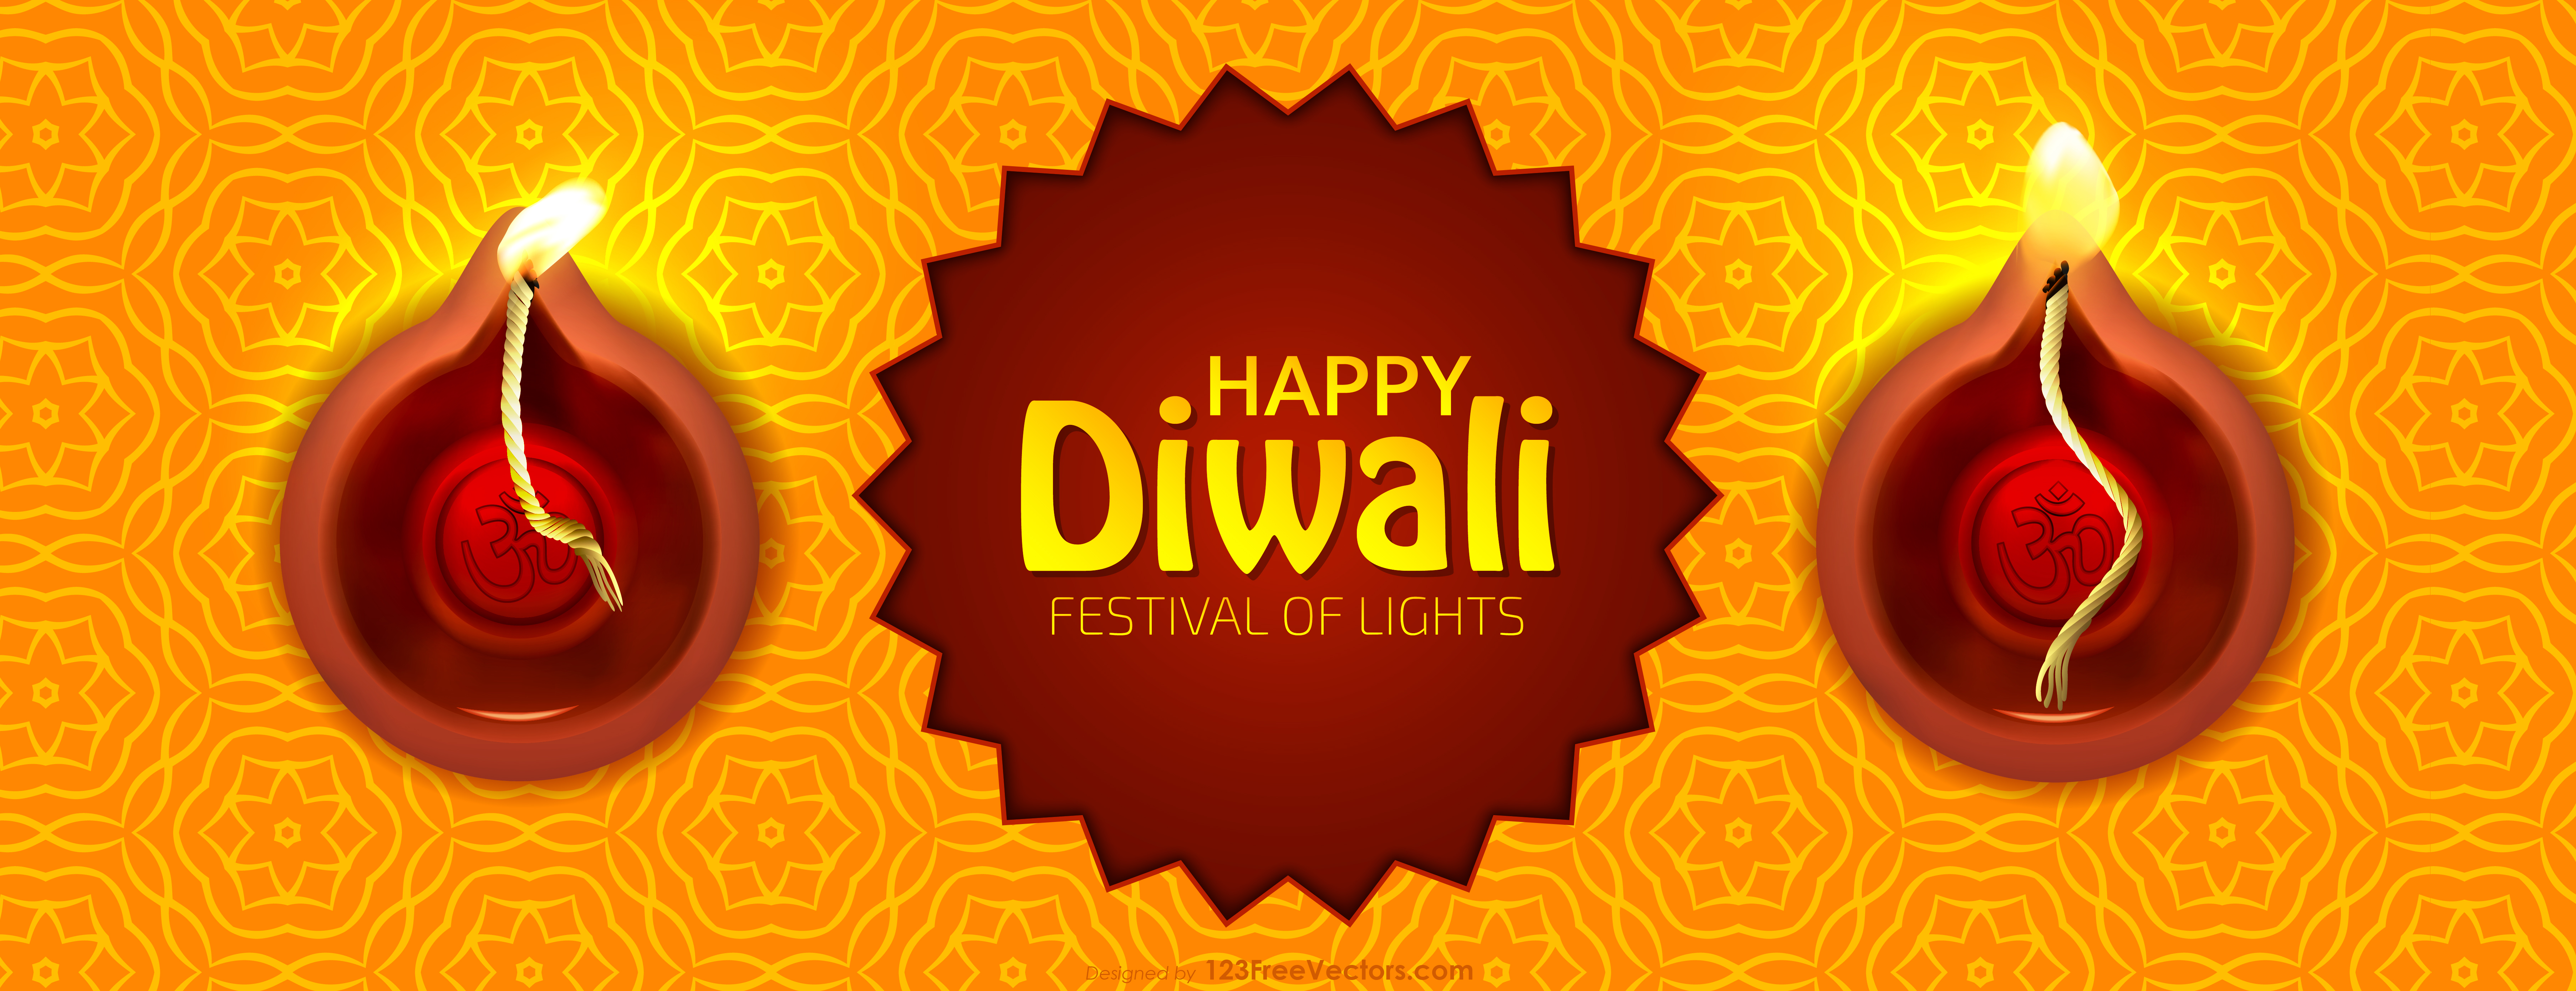 Free Diwali Banner Background with Diya Lamps